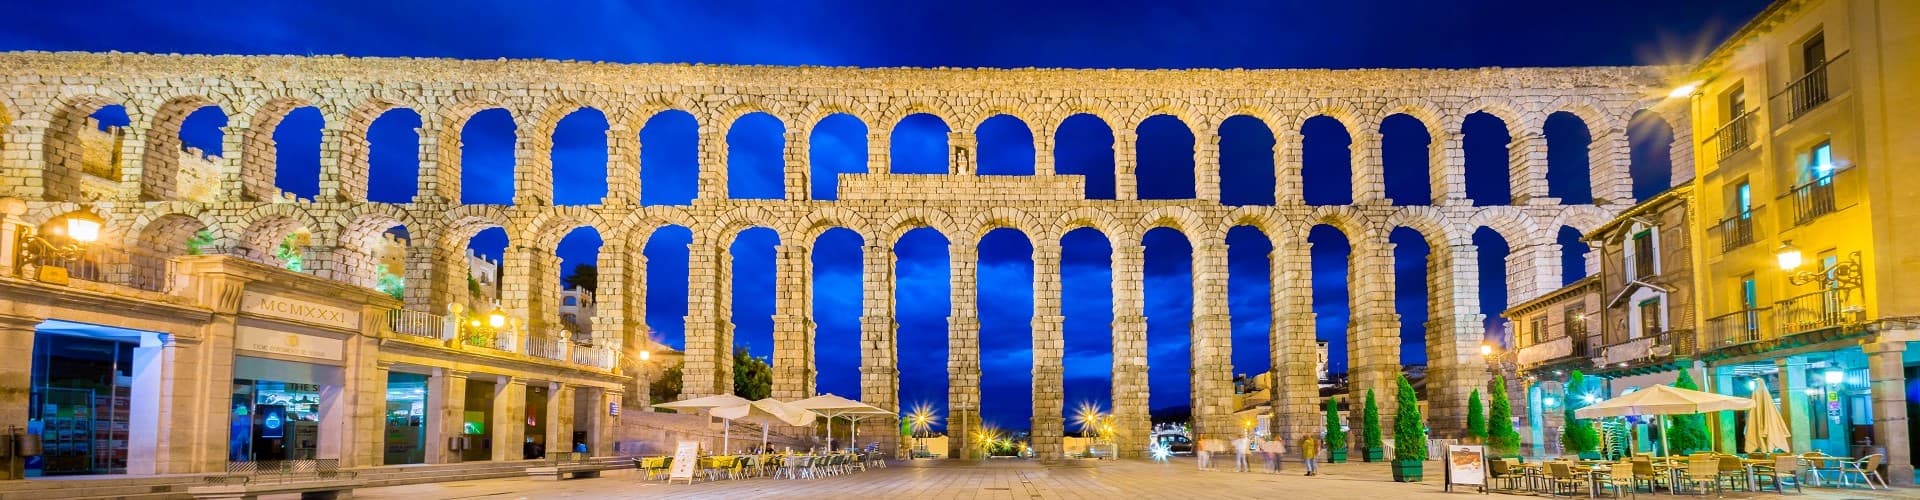 Free Mysteries & Legends Tour Segovia Banner